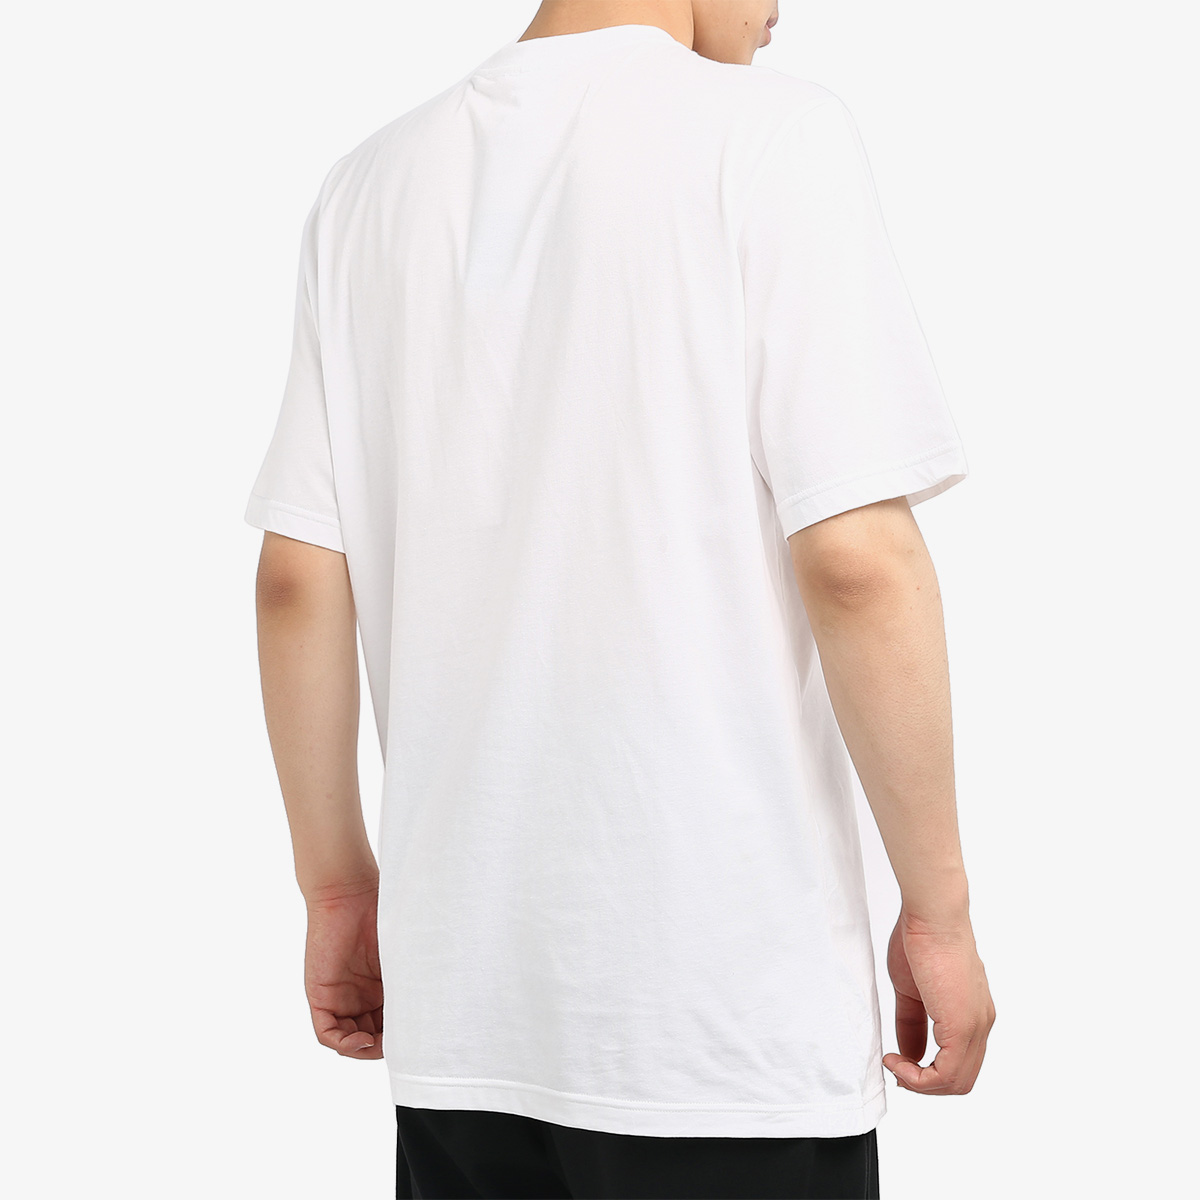 Adidas/阿迪达斯正品 2020夏季新款男子运动型格短袖T恤 DQ3056-图0